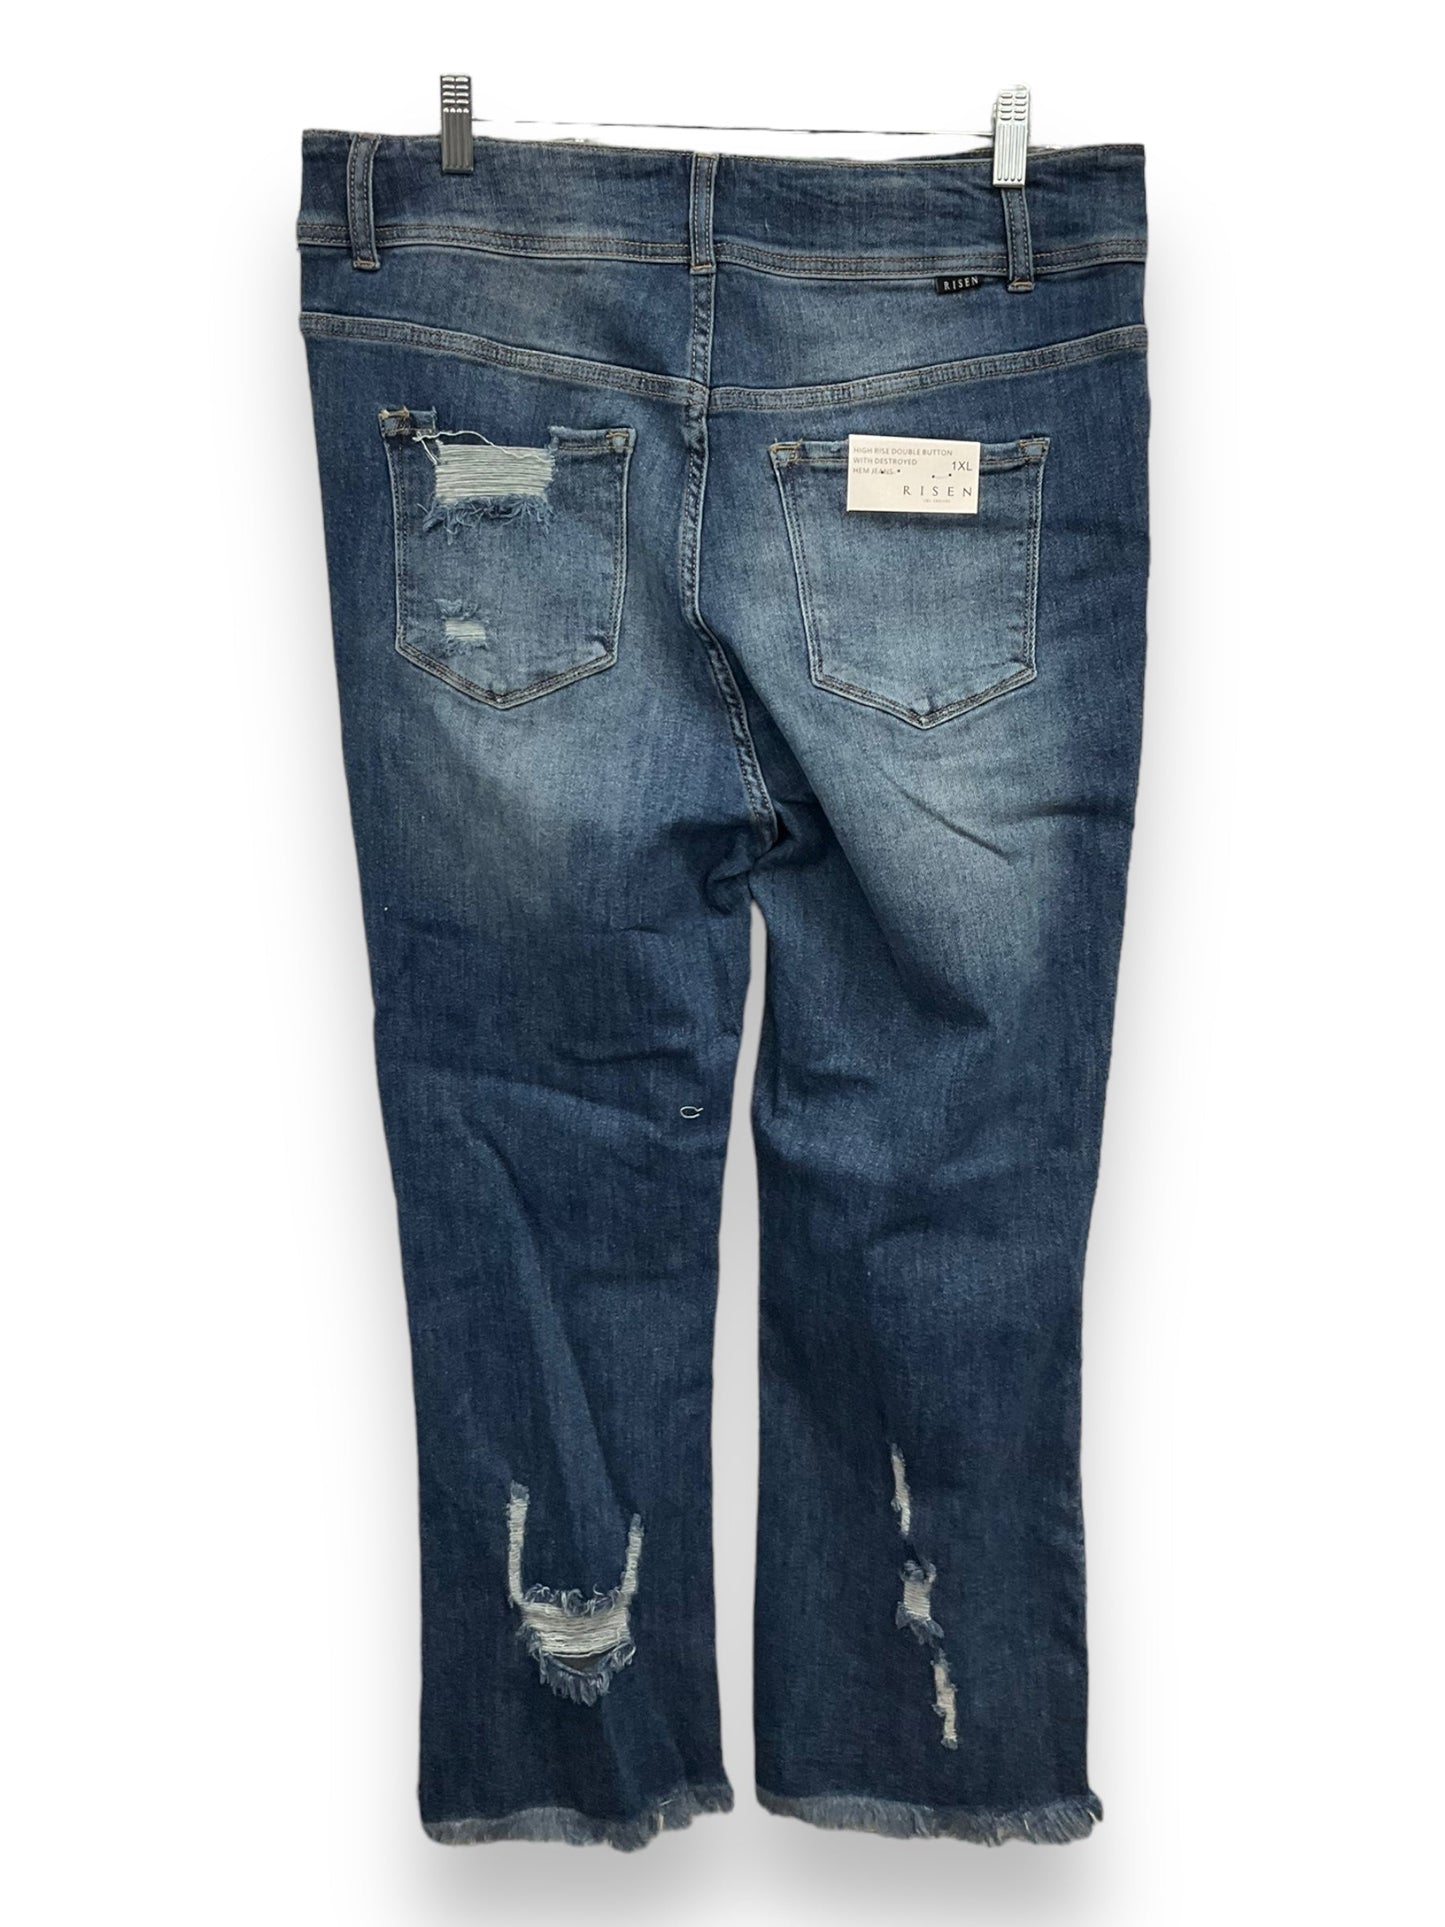 Blue Denim Jeans Skinny Risen, Size 1x